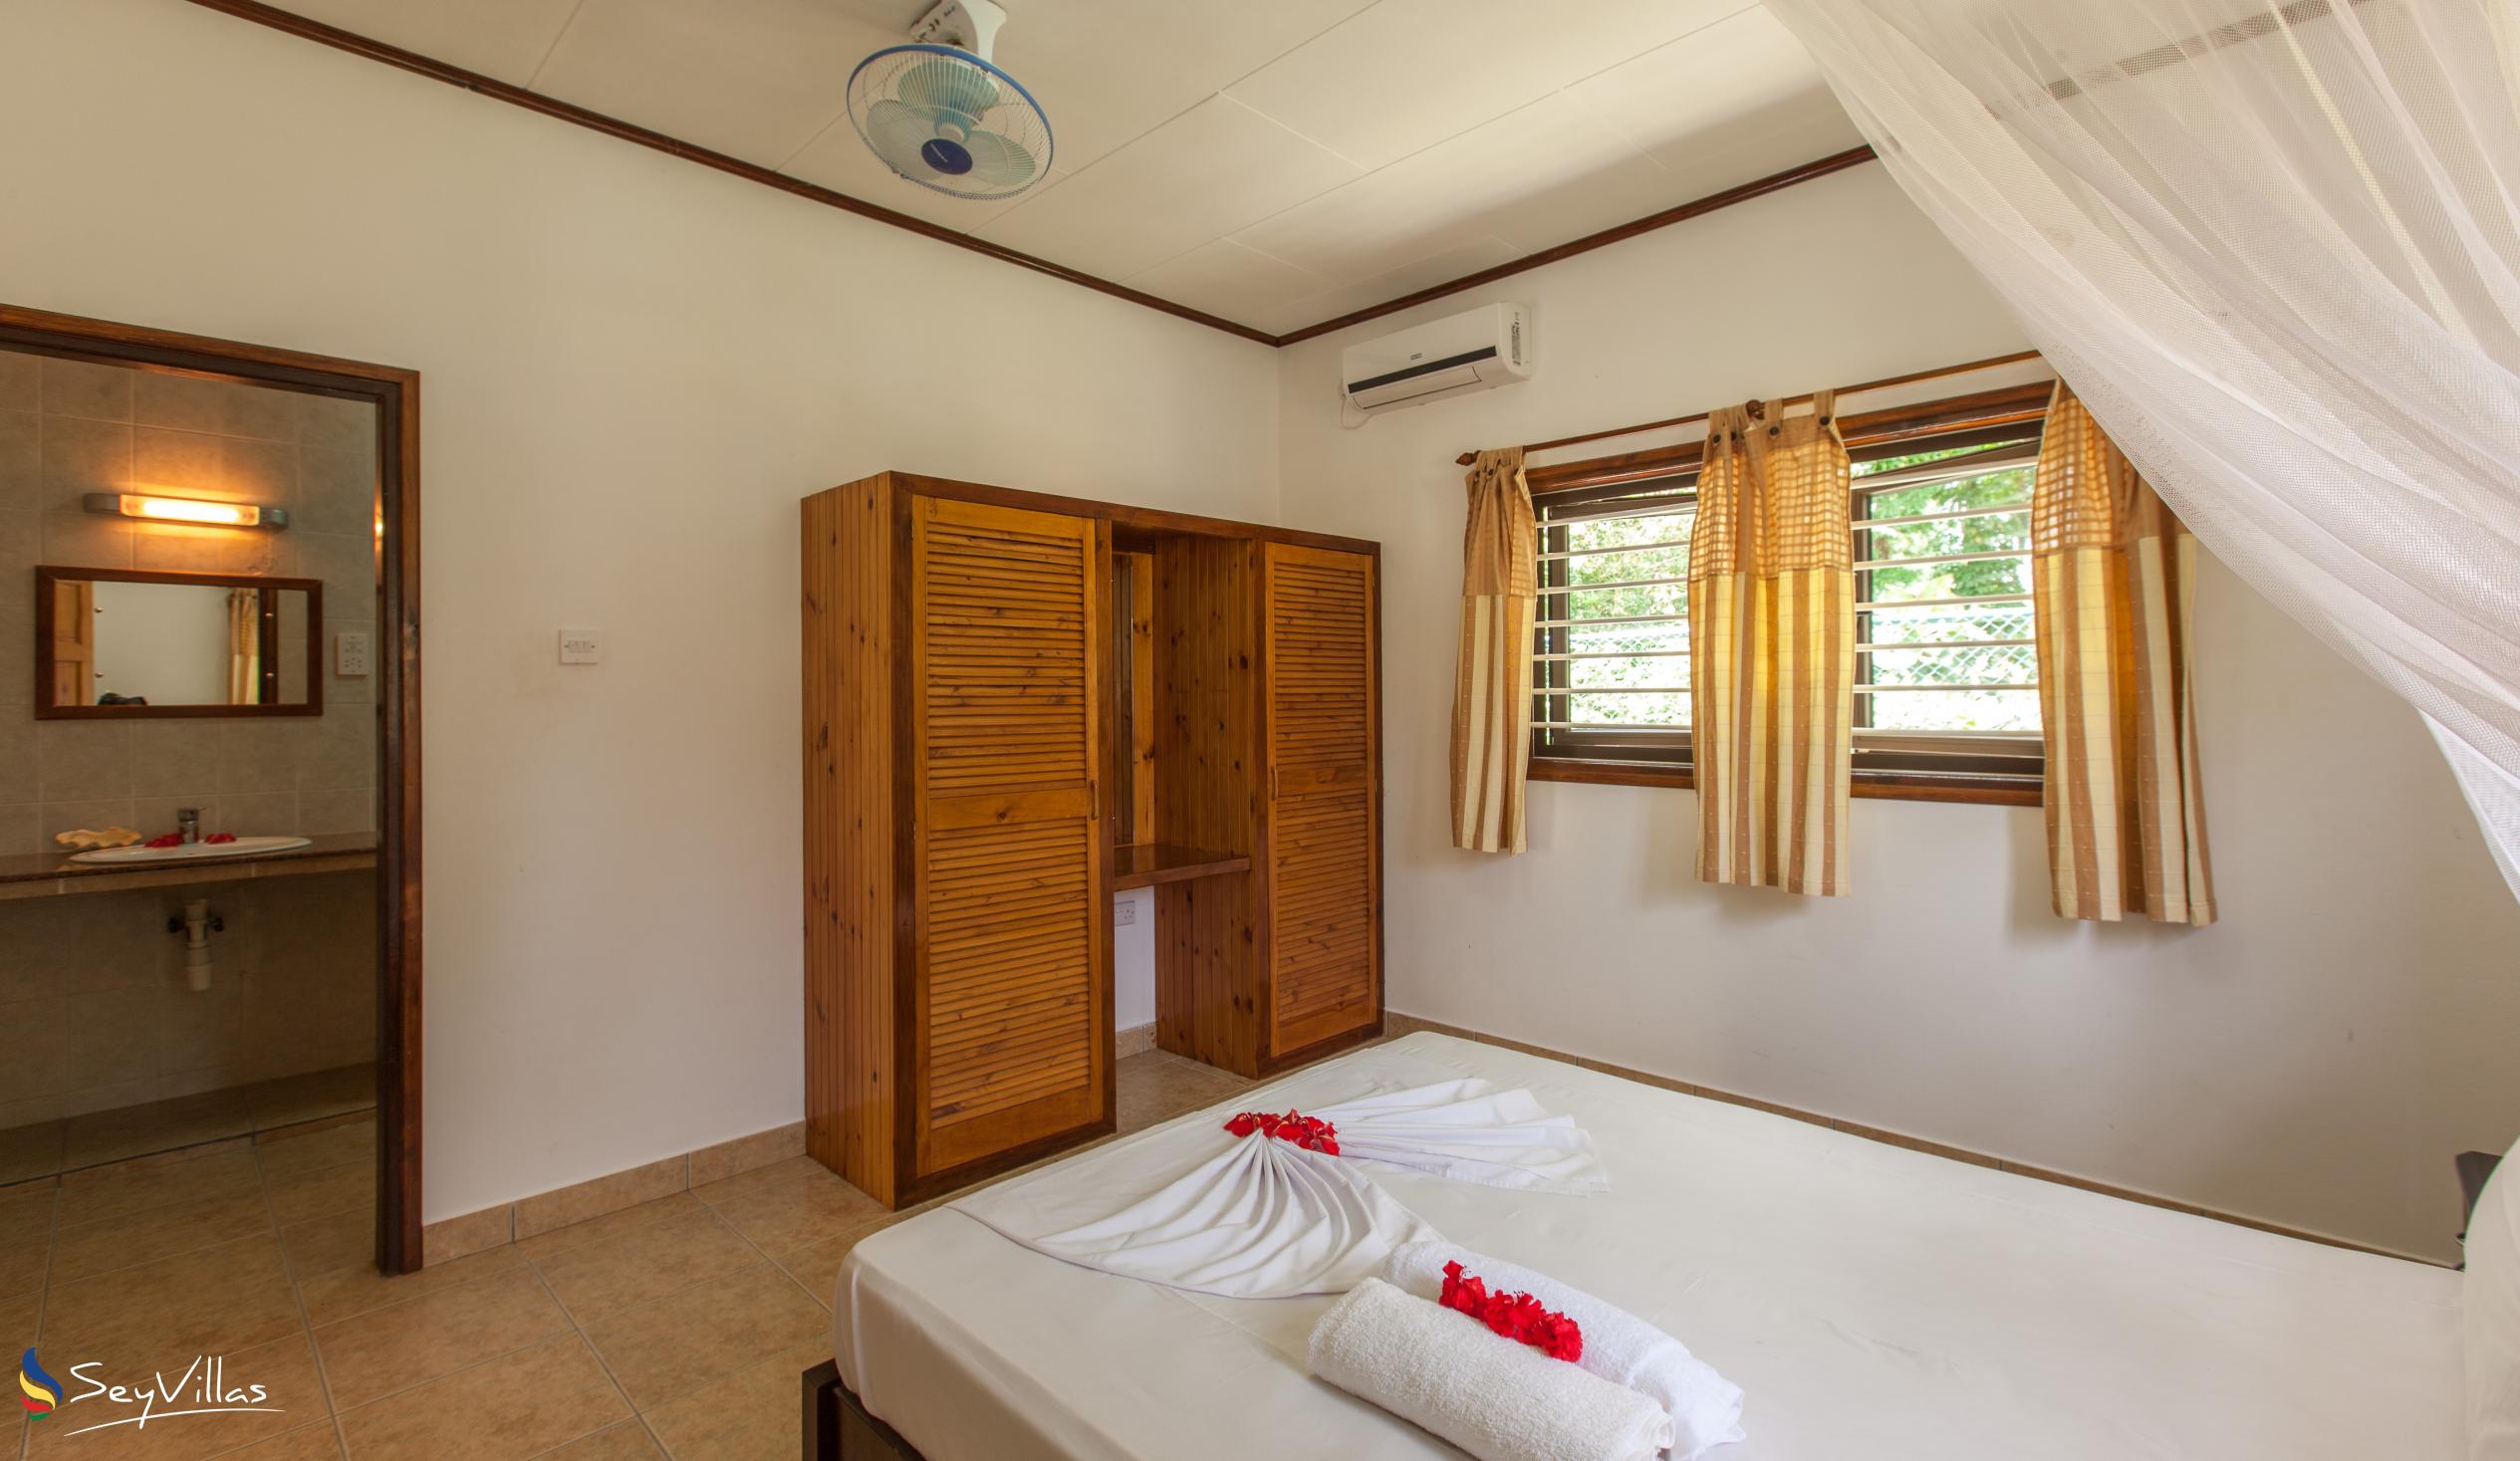 Foto 22: Zerof Self Catering  Apartments - Appartement à 1 chambre - La Digue (Seychelles)